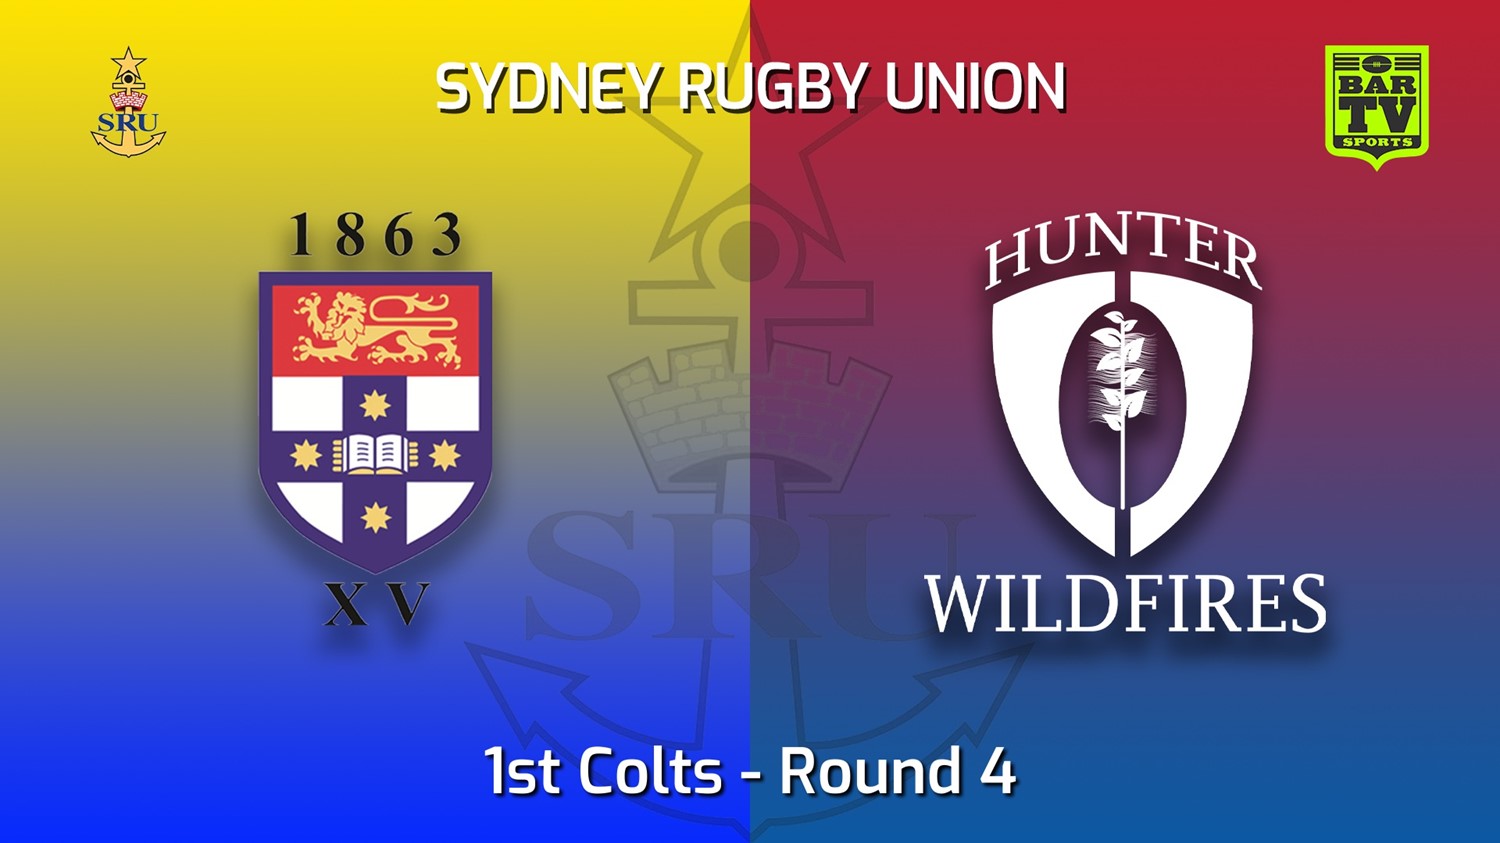 220423-Sydney Rugby Union Round 4 - 1st Colts - Sydney University v Hunter Wildfires Slate Image